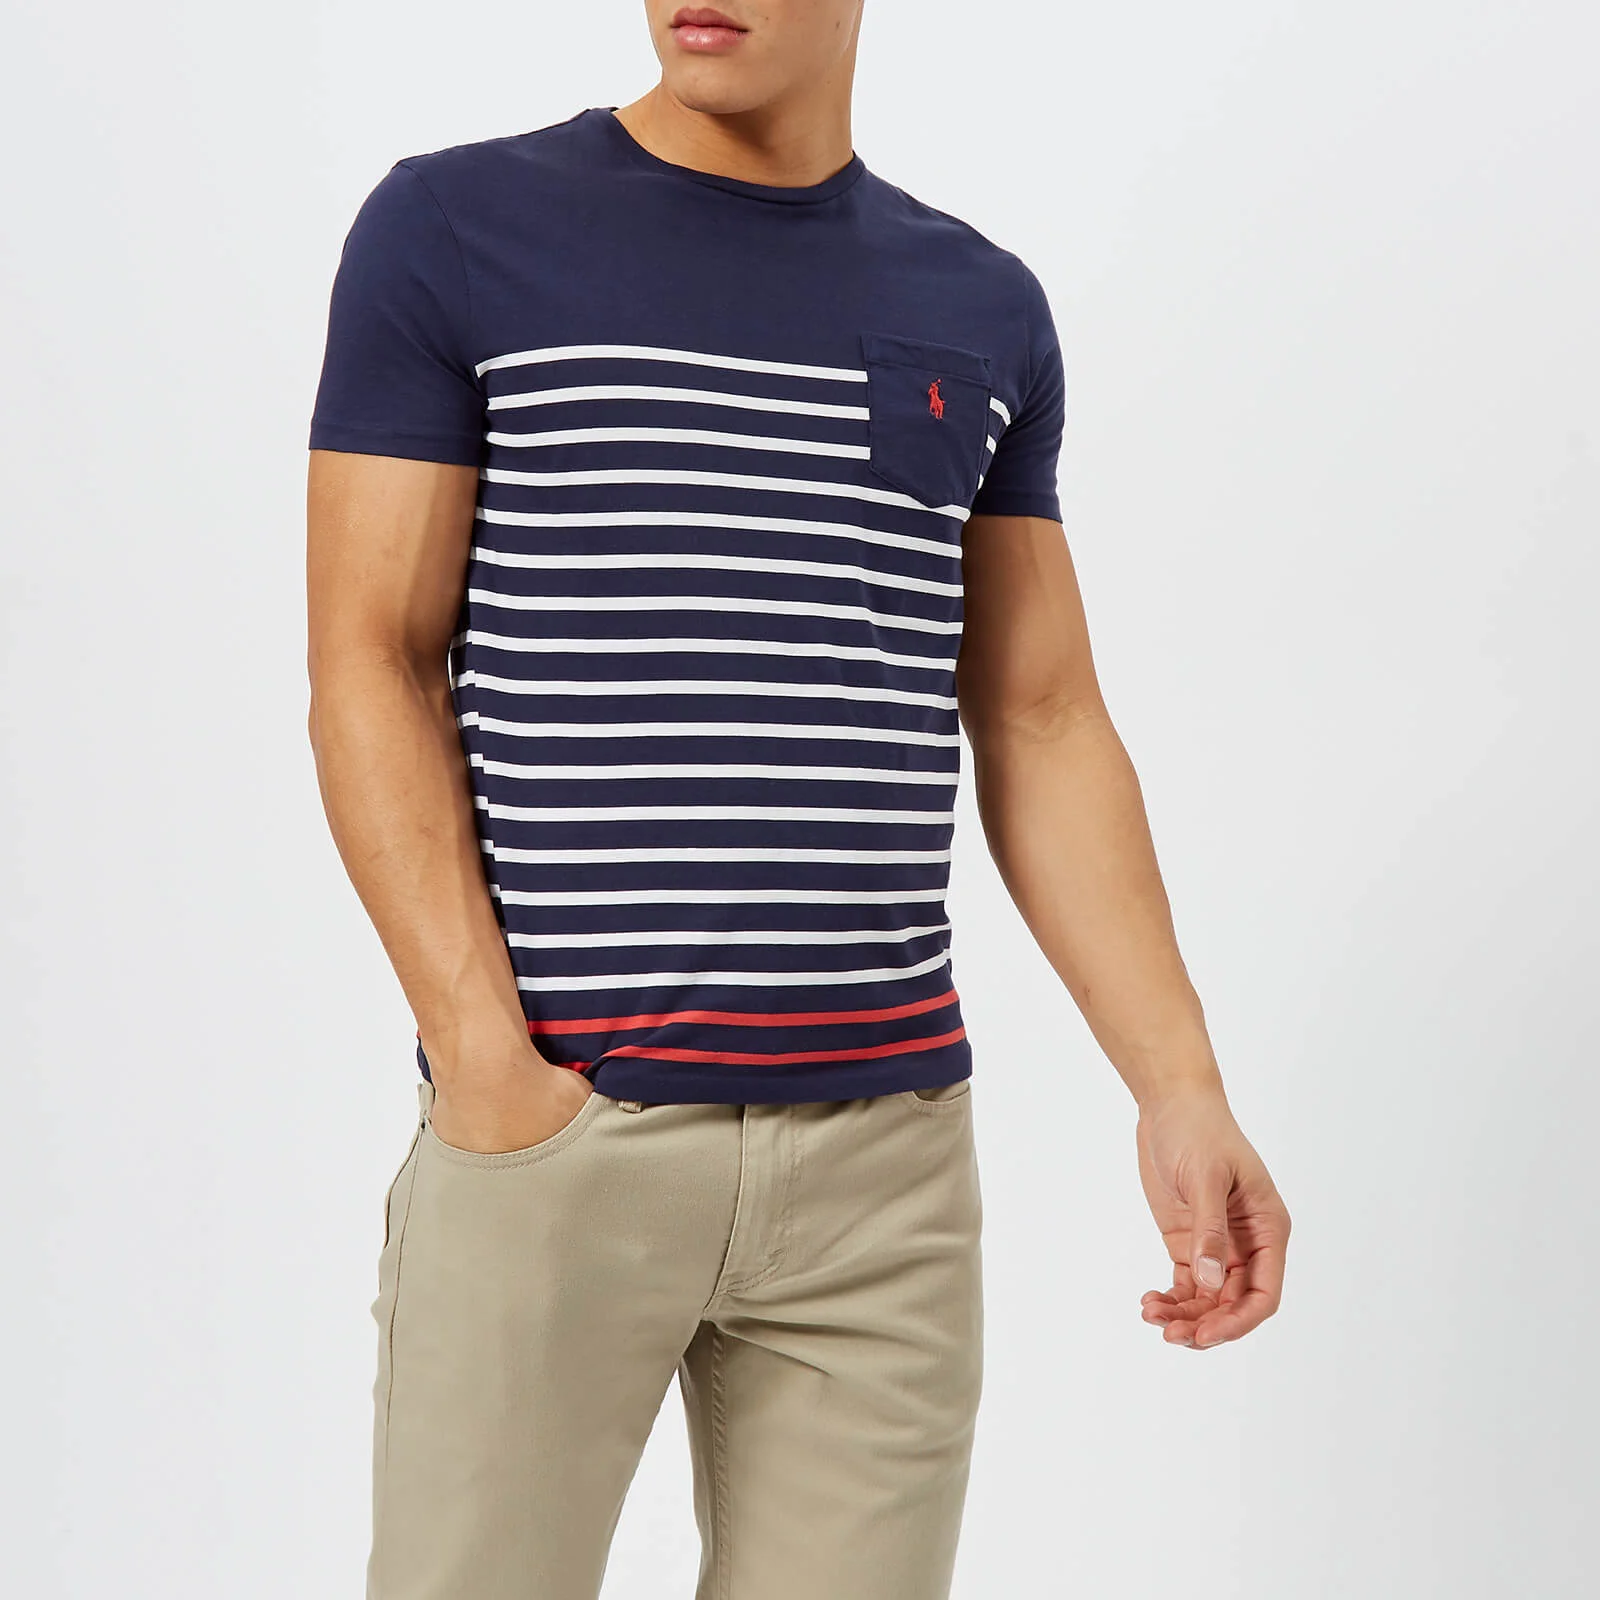 Polo Ralph Lauren Men's Striped Pocket T-Shirt - Newport Navy Image 1